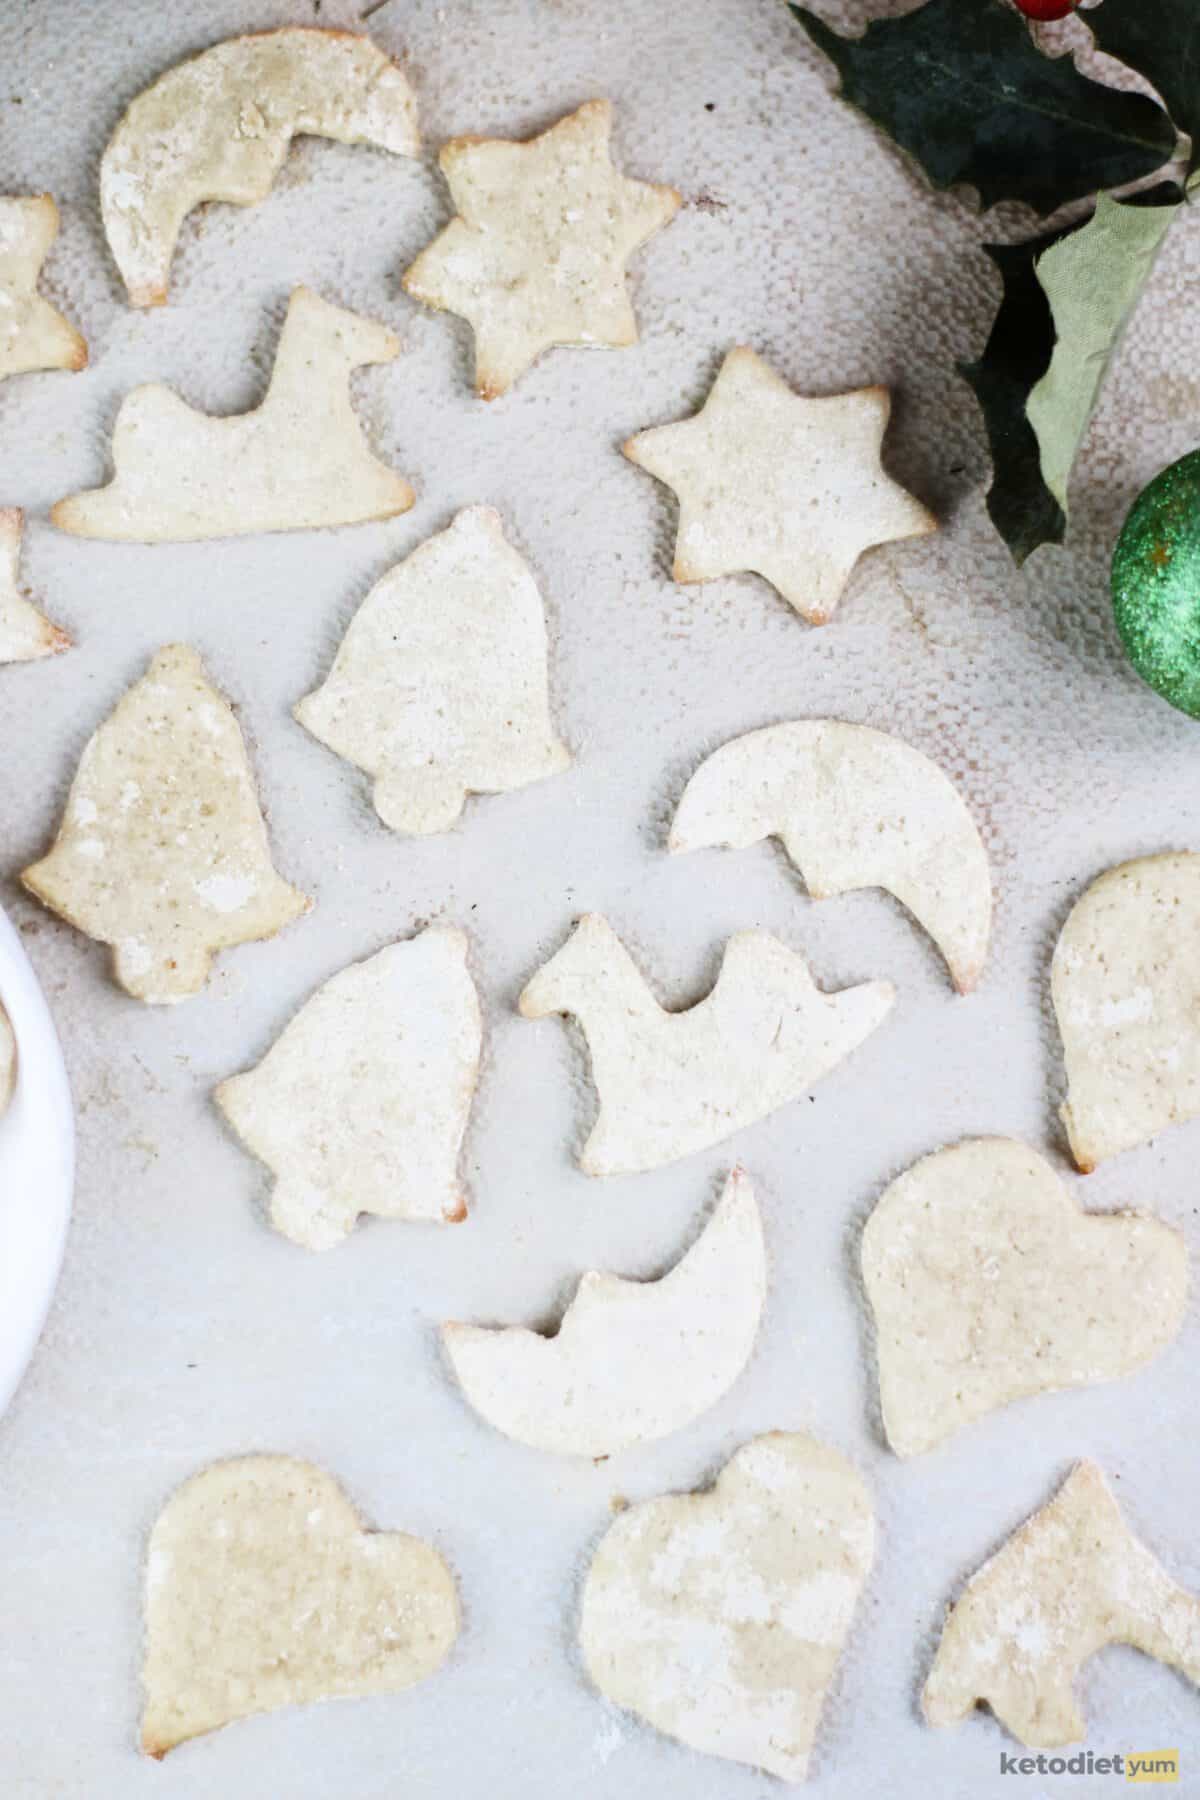 sugar free cookies - keto sugar cookies cut into Christmas shapes on a table